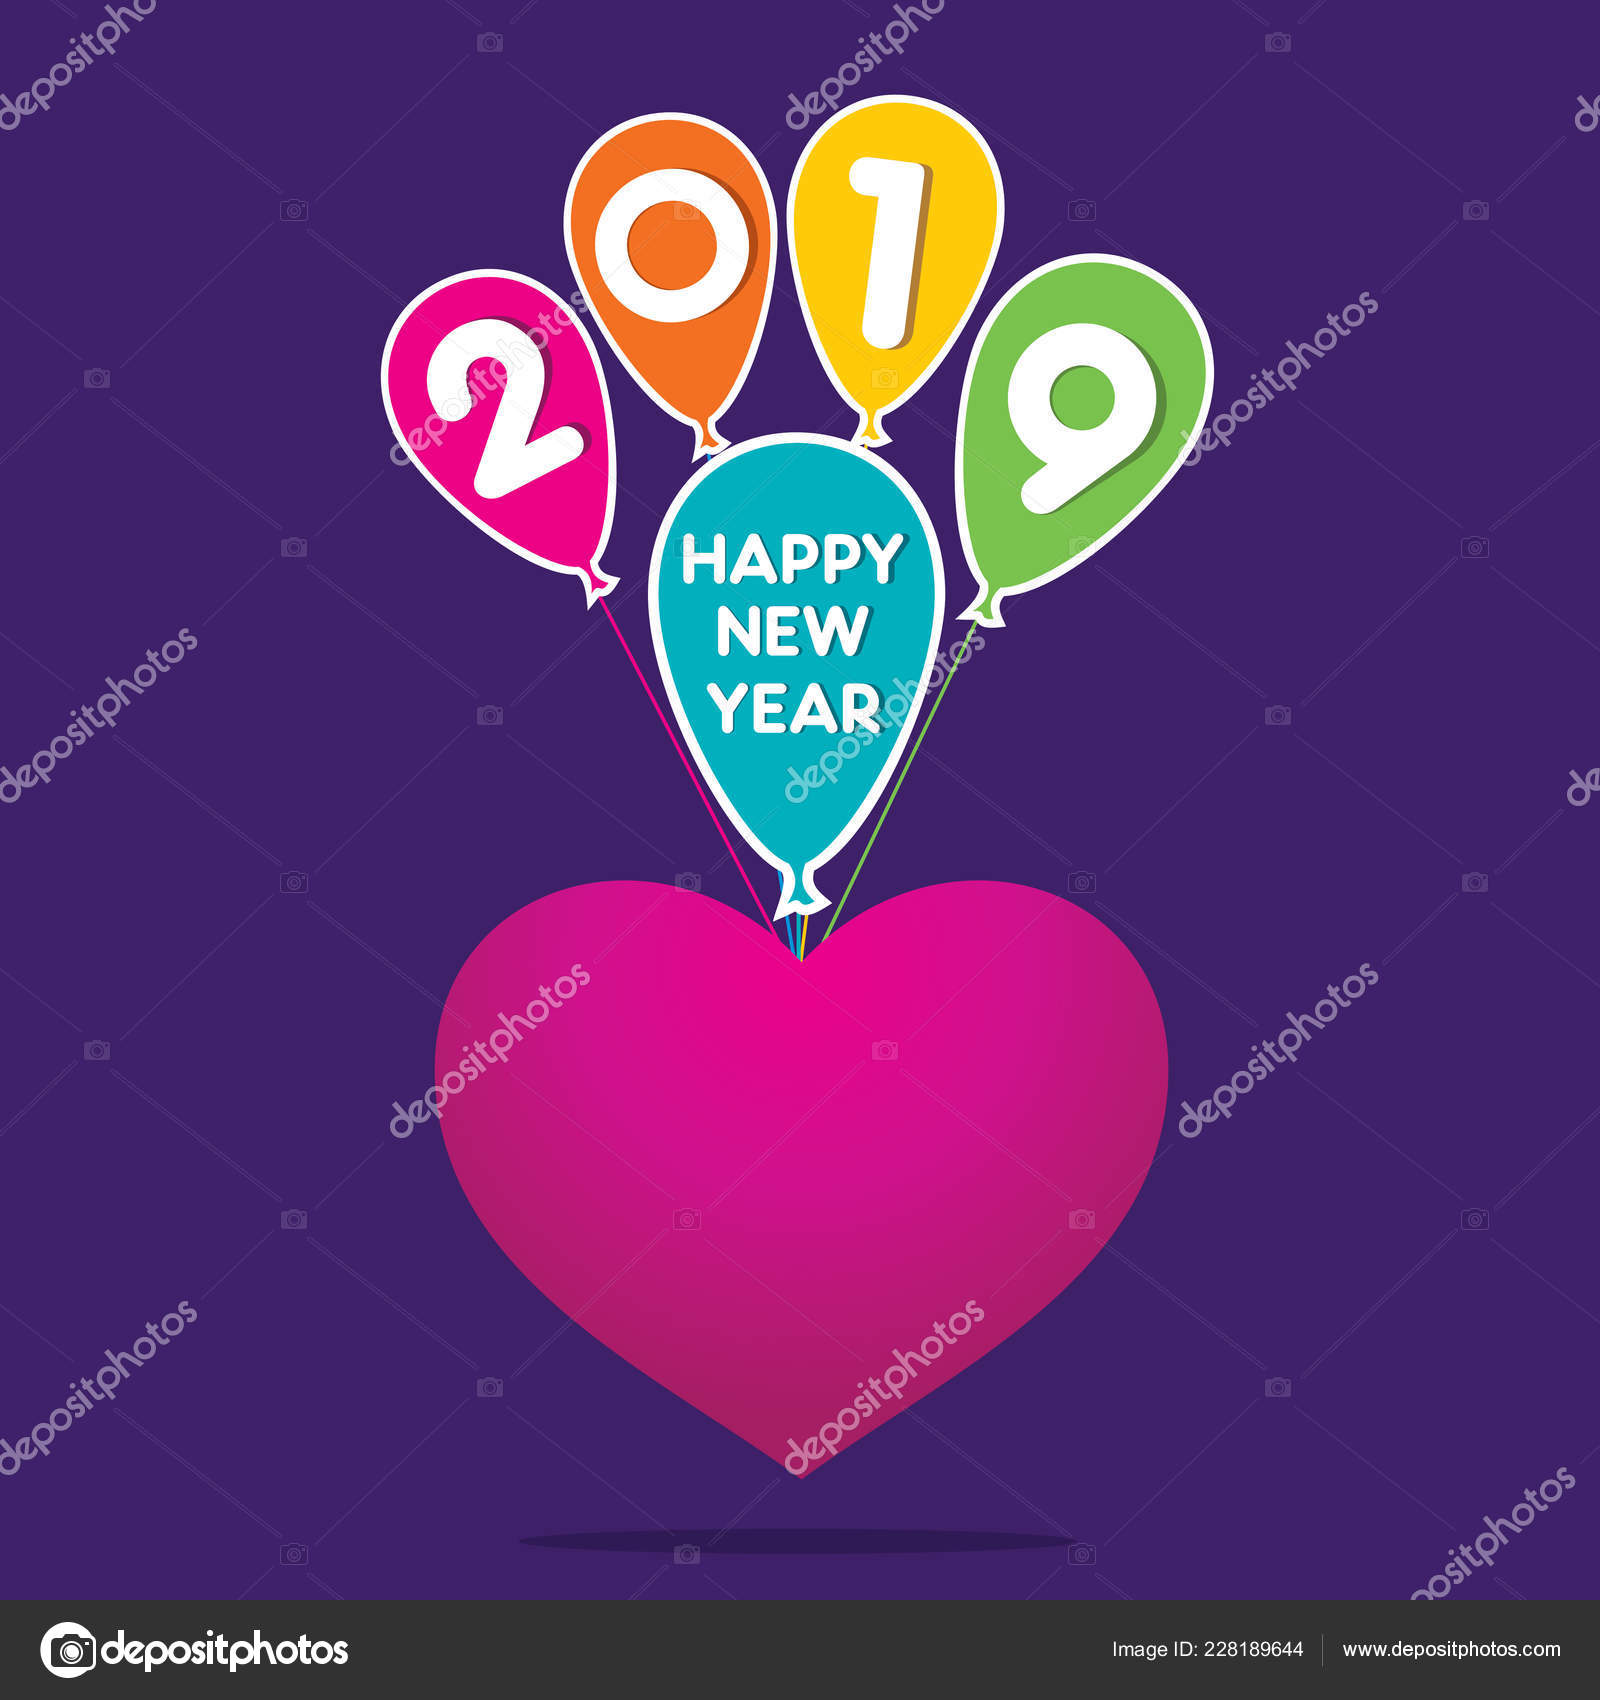 Creative New Year 19 Poster Design Heart Shape Balloon Vector Image By C Vectotaart Vector Stock